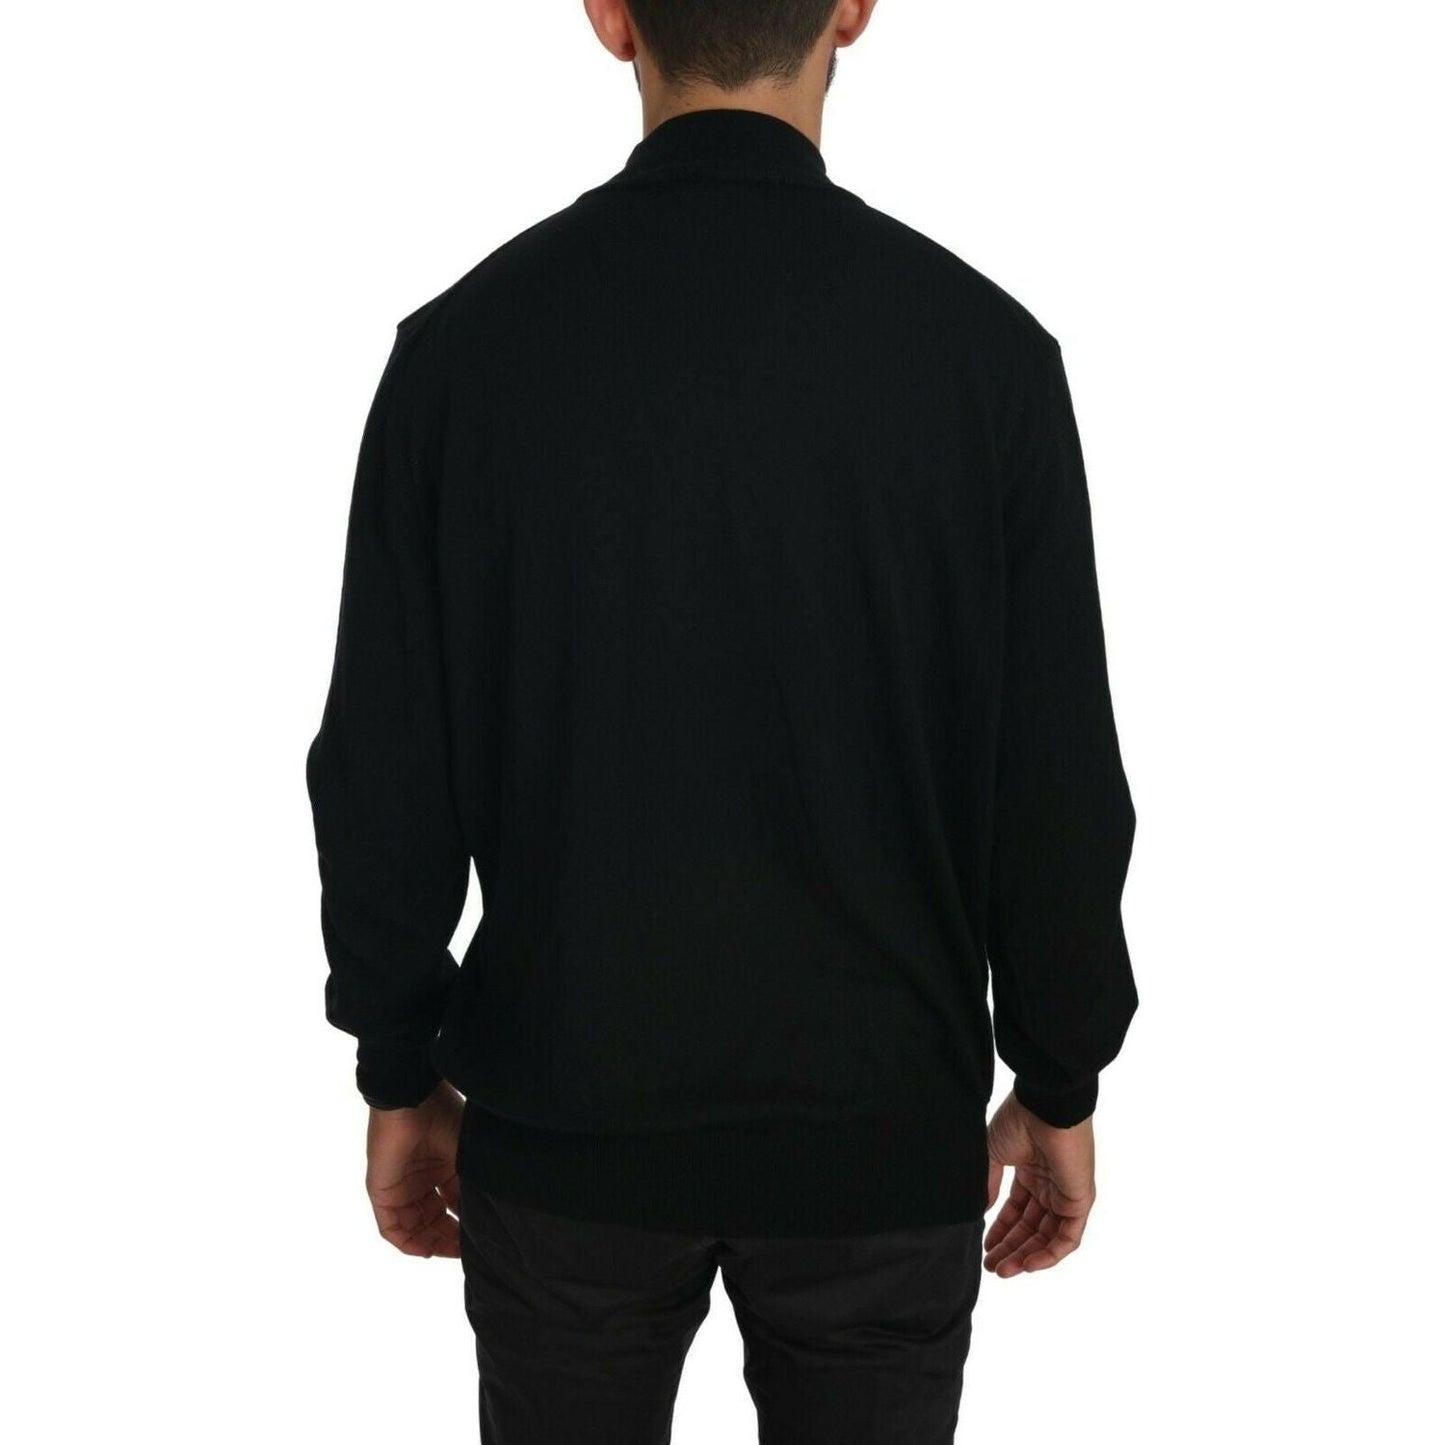 MILA SCHÖN Elegant Black Virgin Wool Pullover Sweater black-turtle-neck-pullover-top-virgin-wool-sweater s-l1600-37-81fc1cb0-cea.jpg